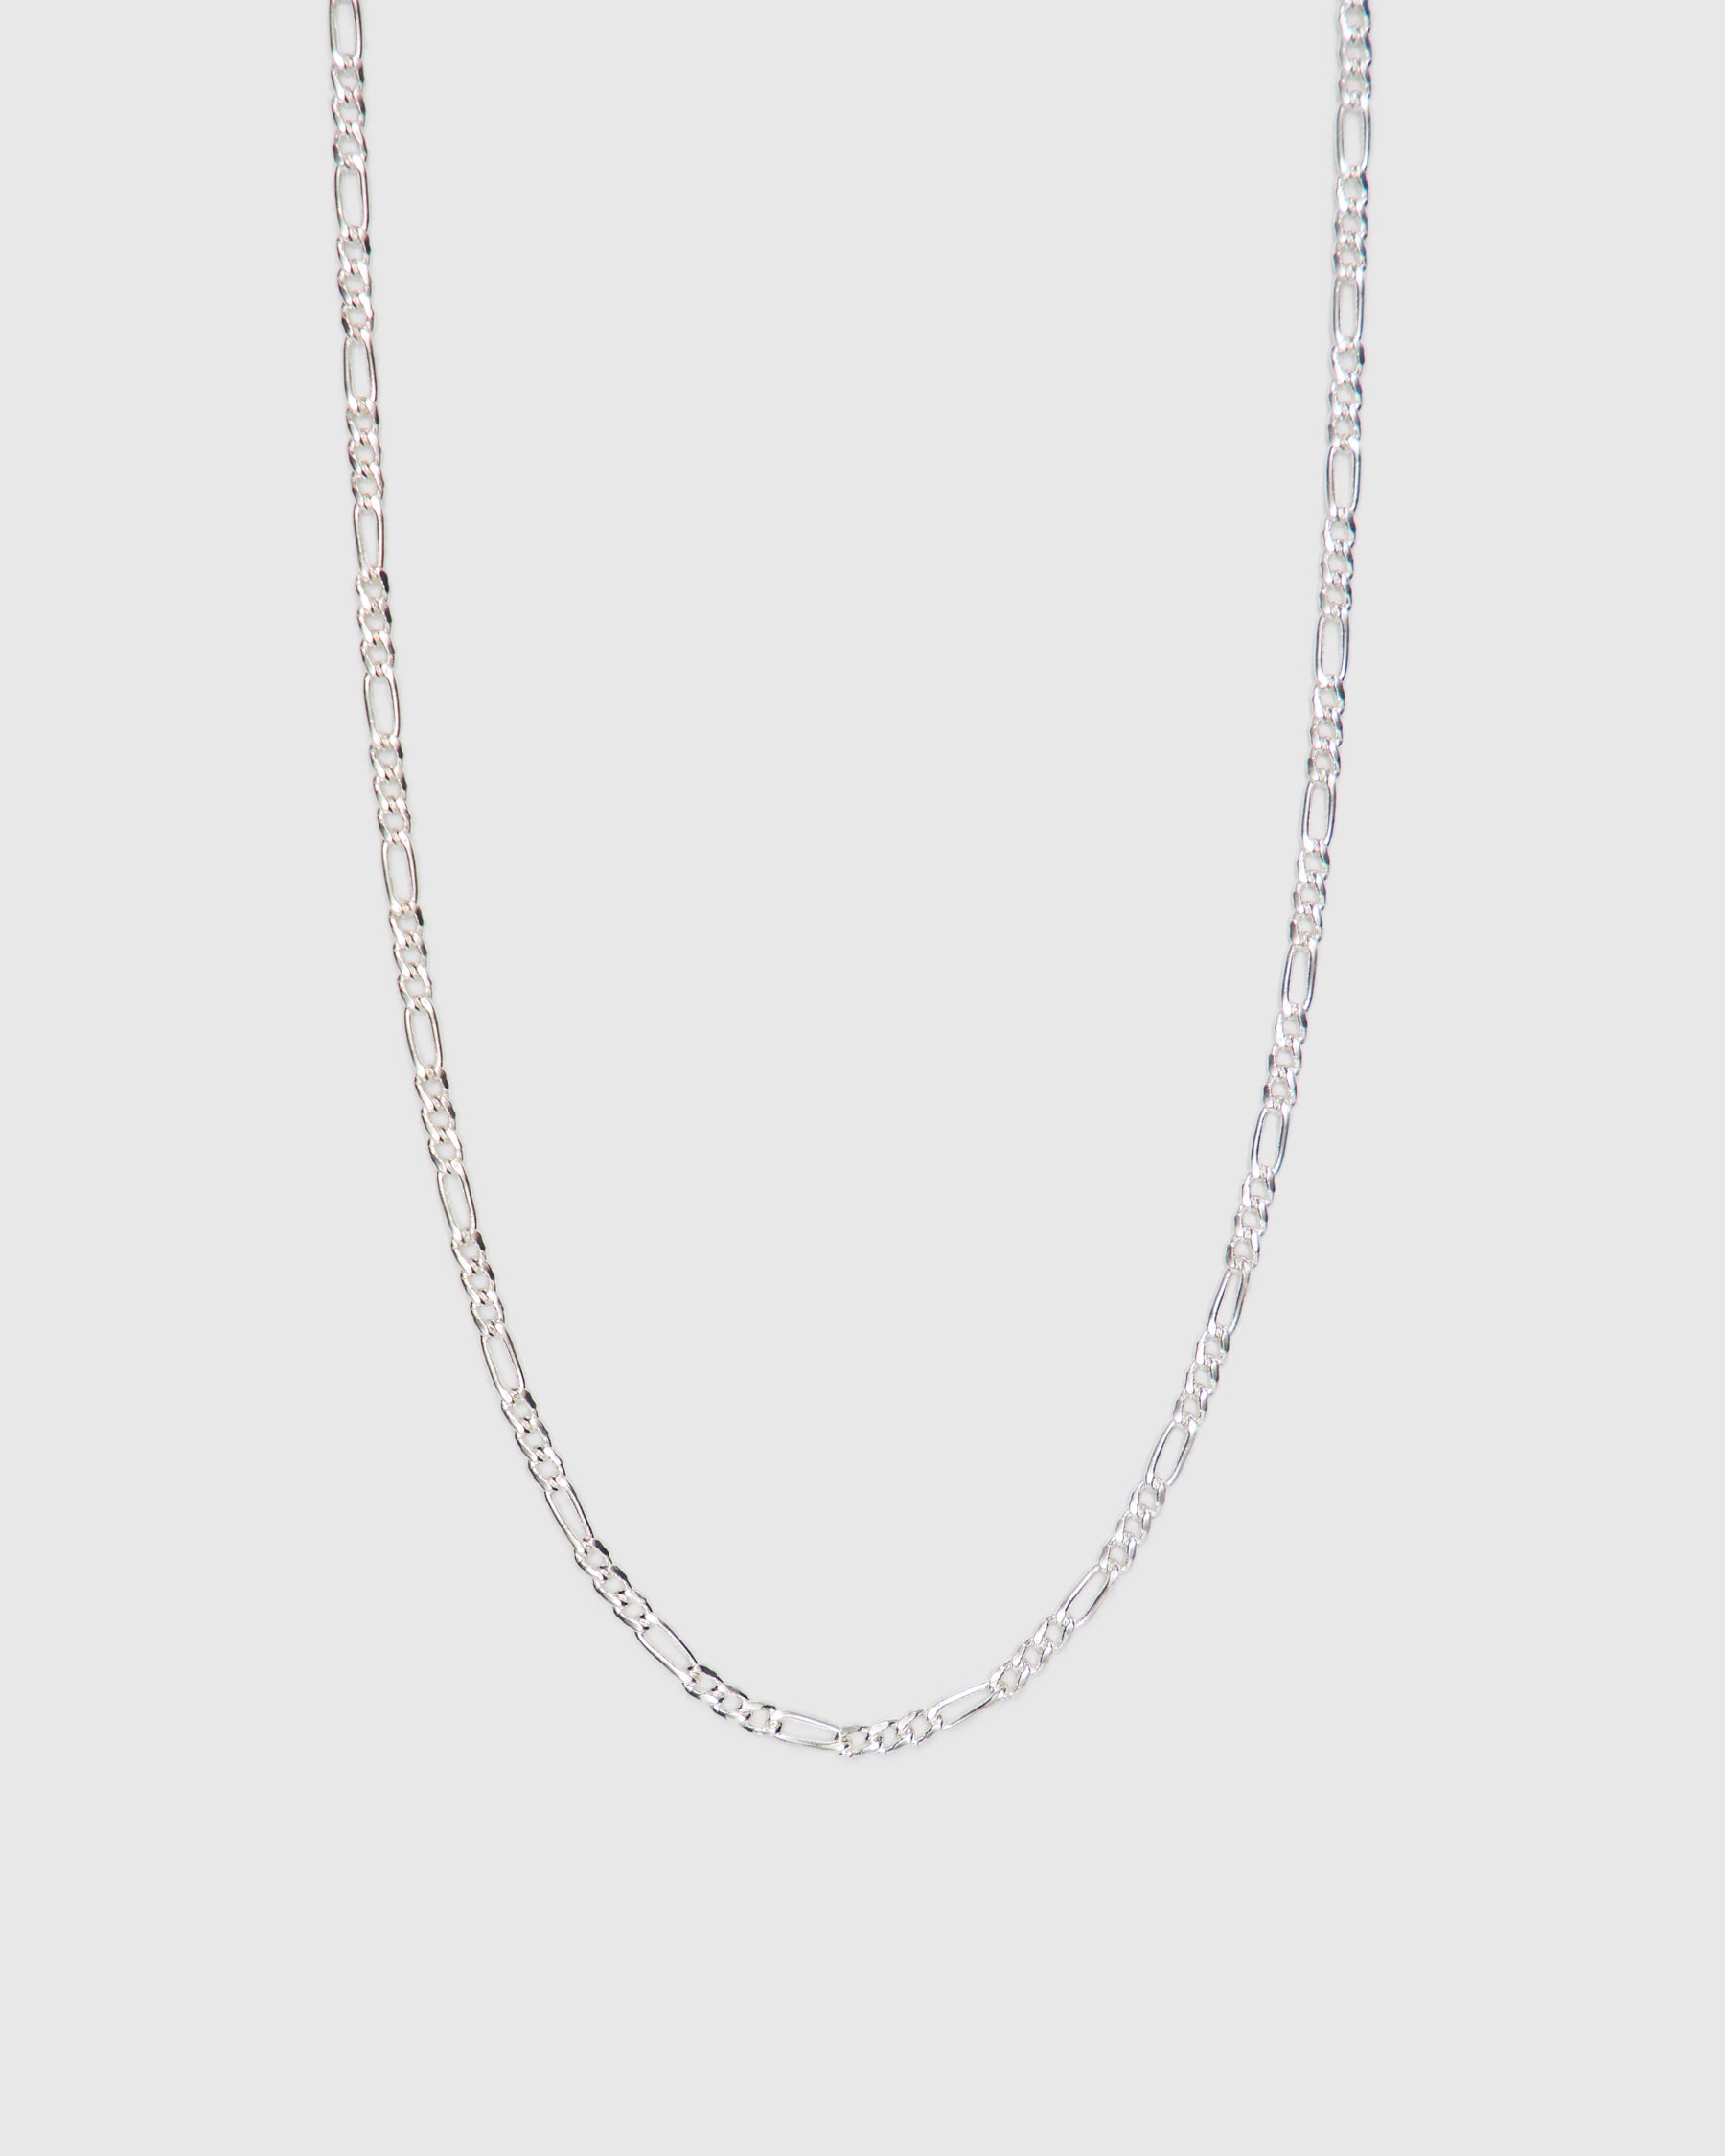 Figaro Chain in Silver 925